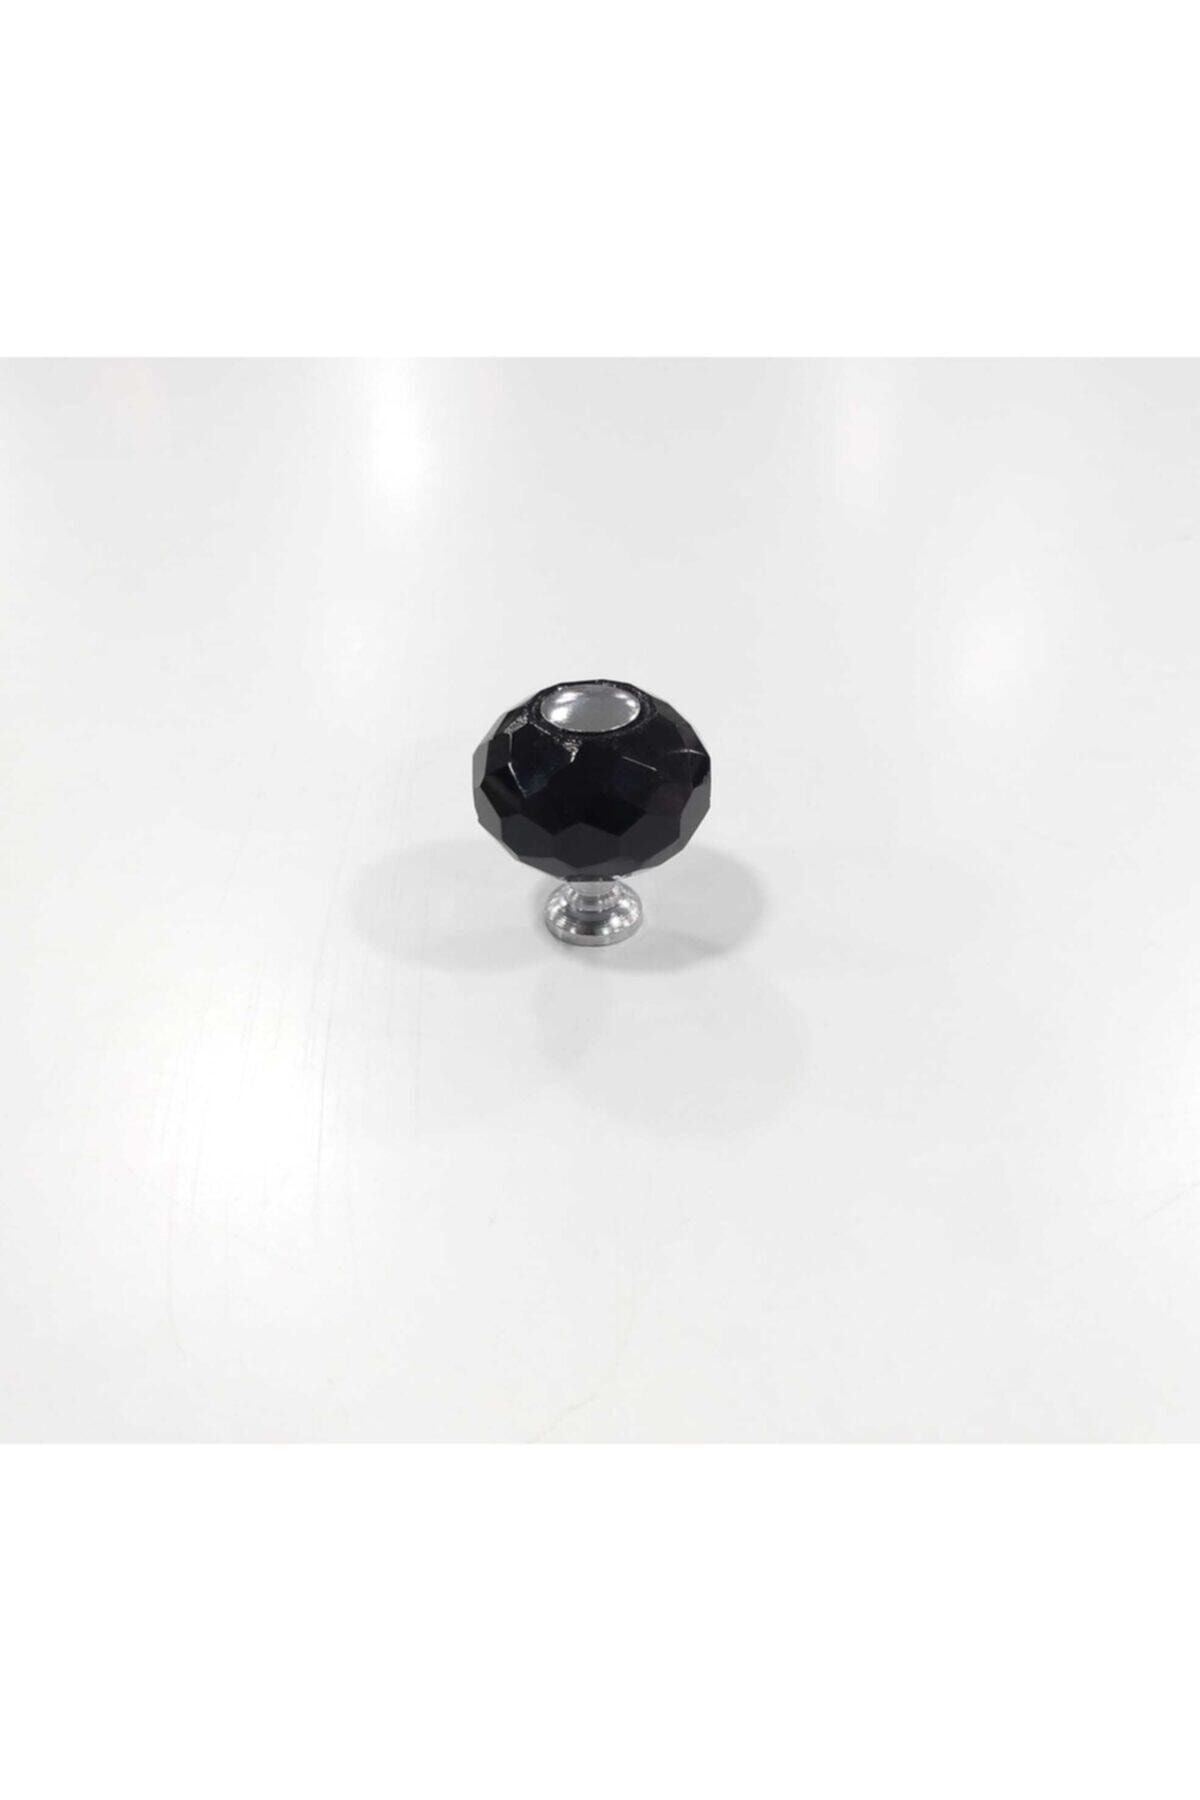 ARON 30mm Oscar Düğme Kulp Küre Cam Siyah-krom Kristal Kulp Komidin Konsol Şifonyer